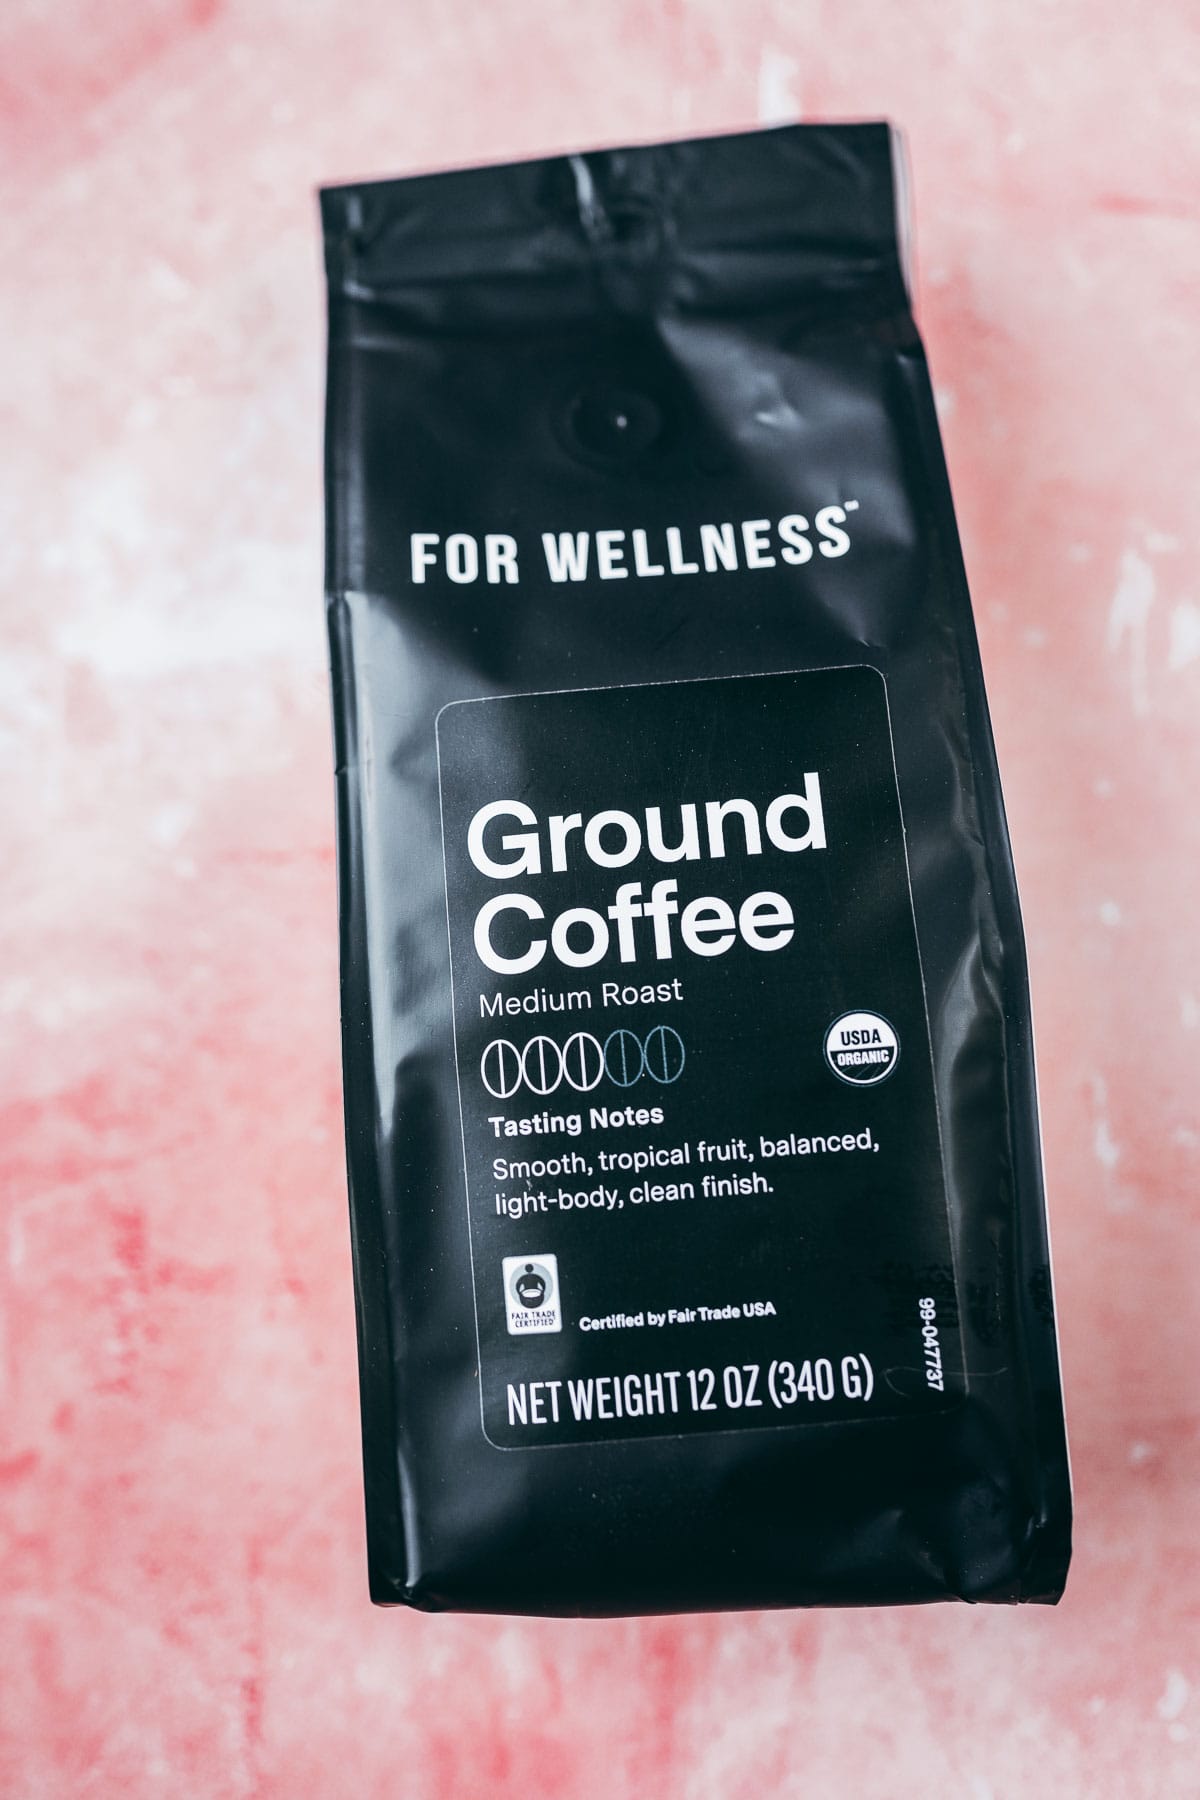 A bag of For Wellness organic ground coffee.